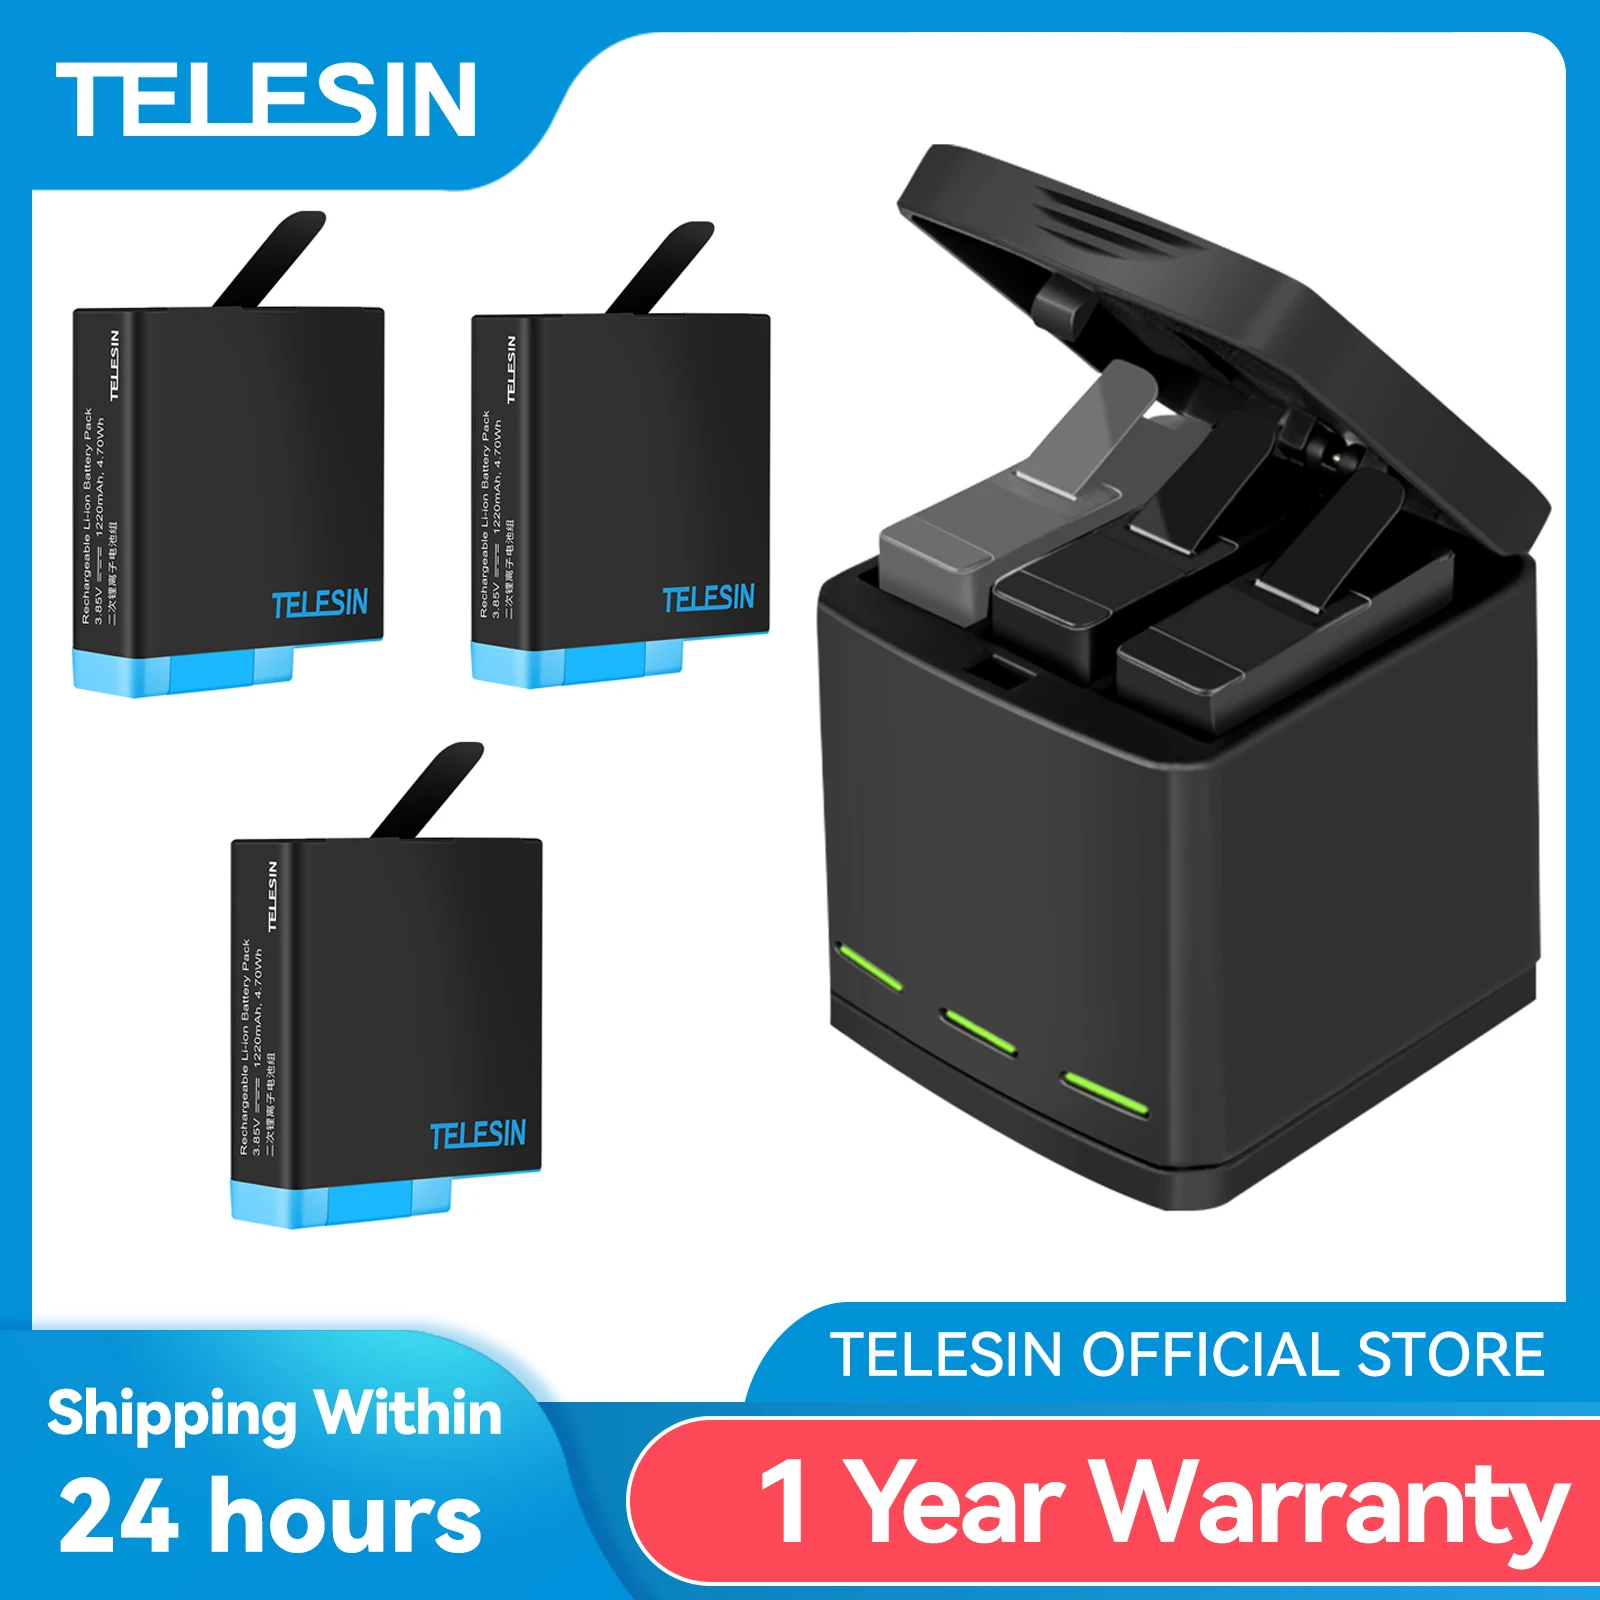 TELESIN-Lot de 3 Batteries 1750mAh, Chargeur GoPro 12 11 Slots